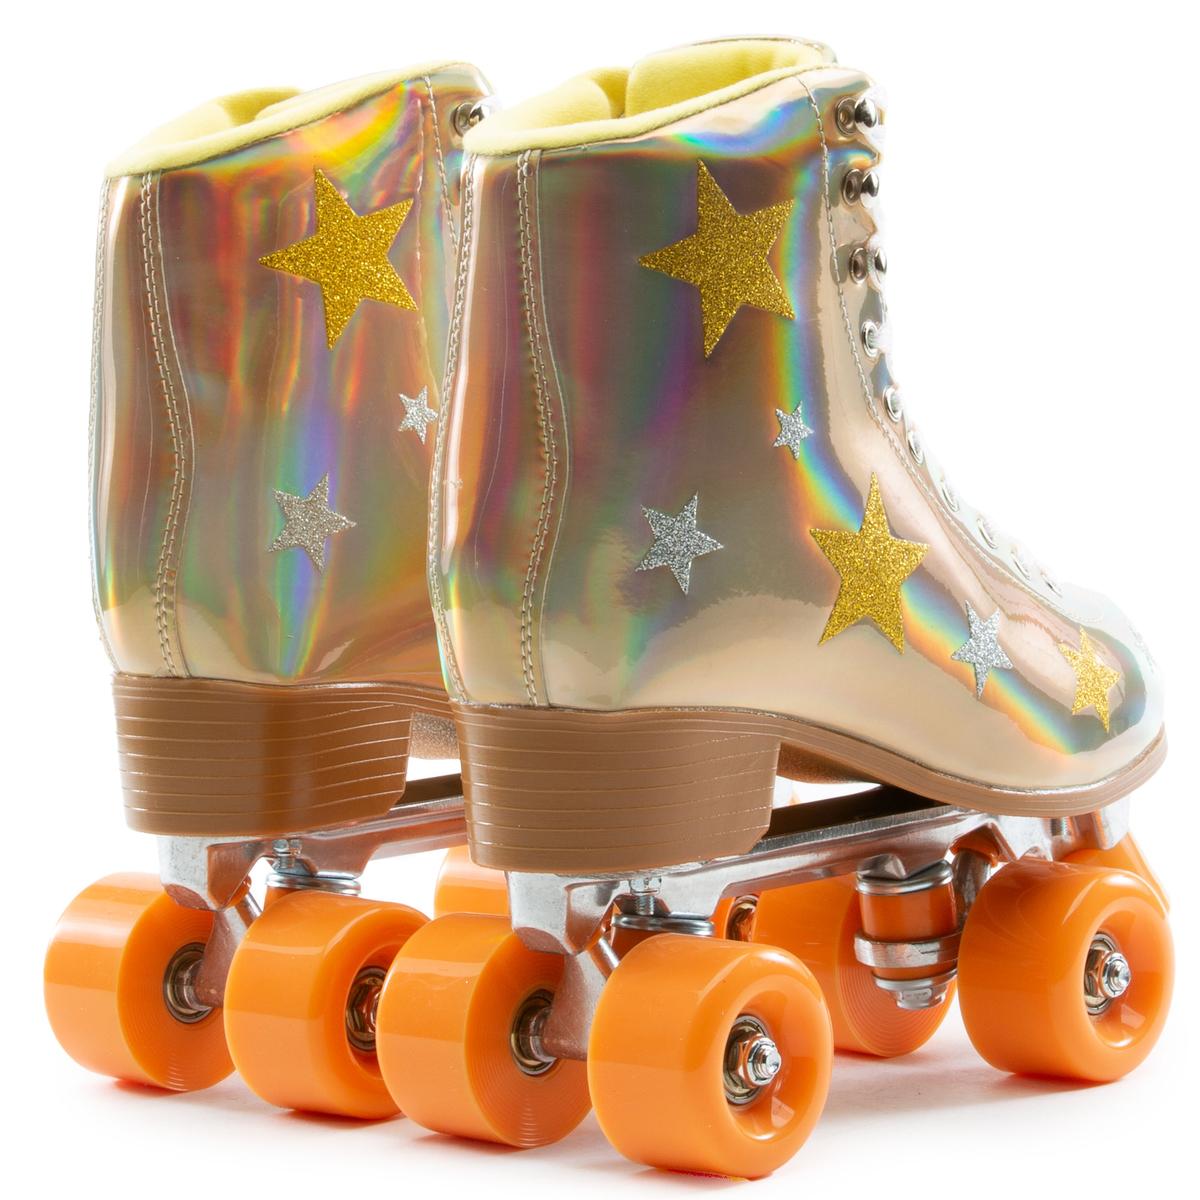 Archie-224 PomPom Roller Skates